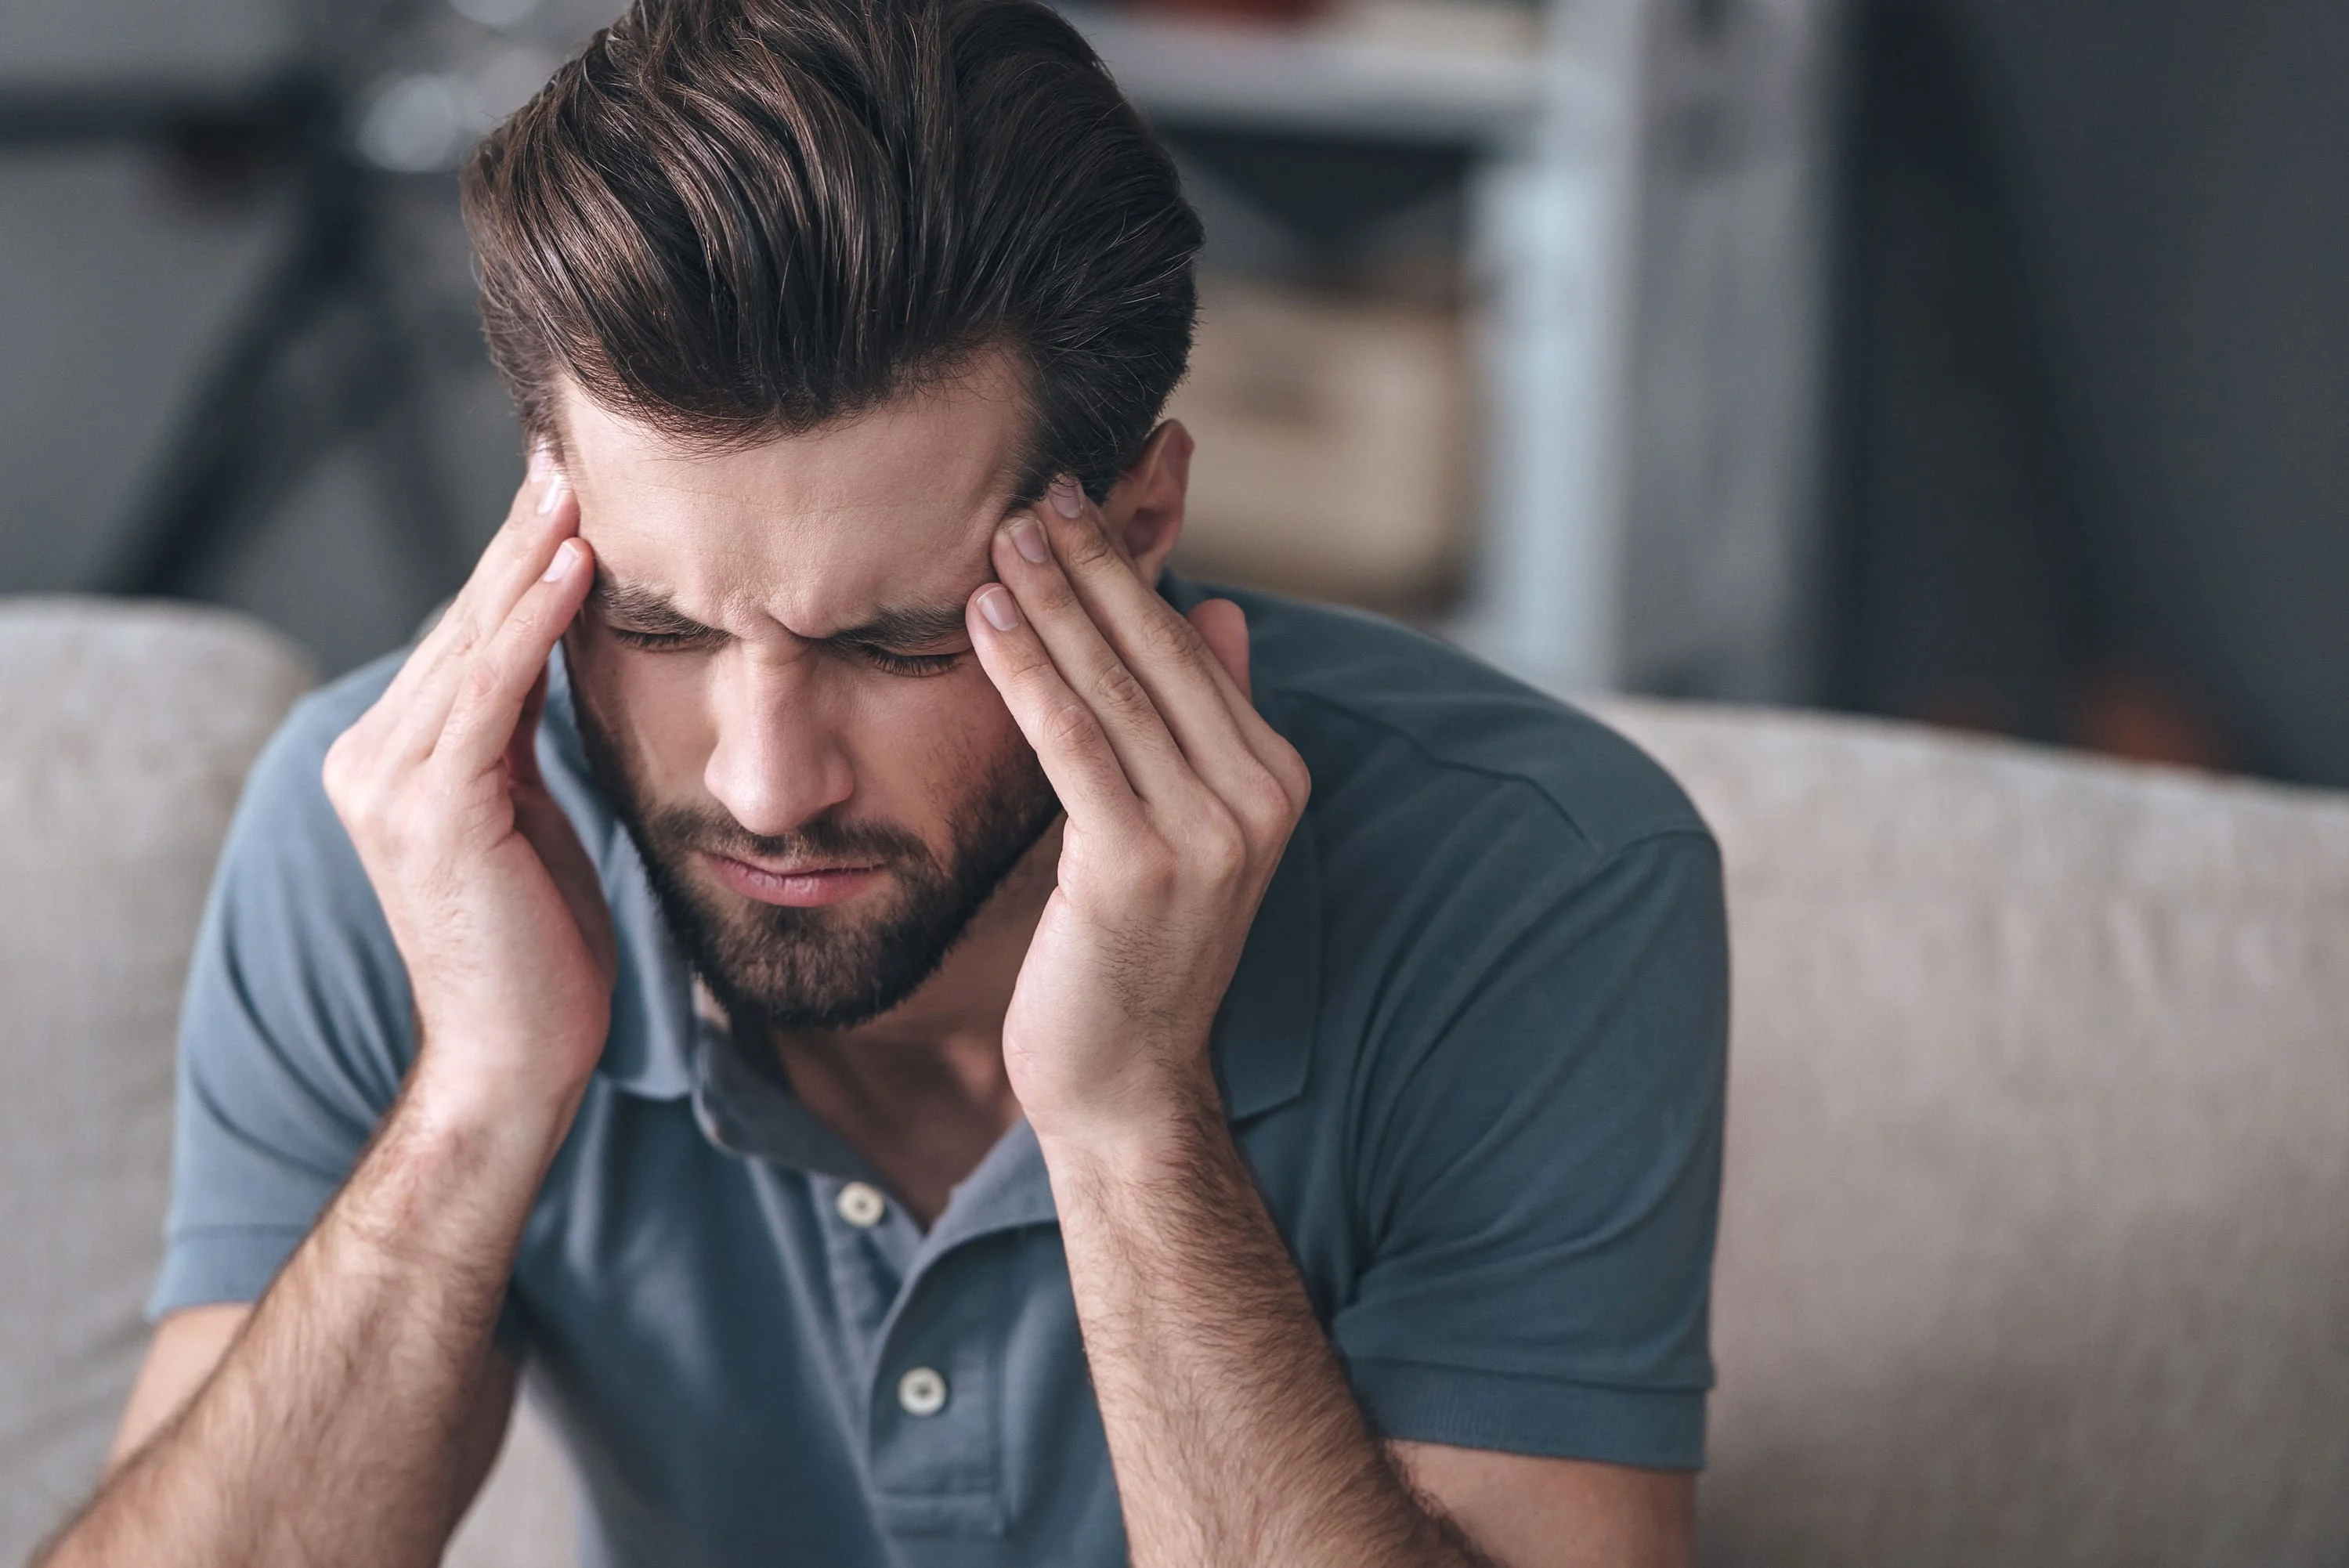 Headaches and Migraine Treatment in Birmingham